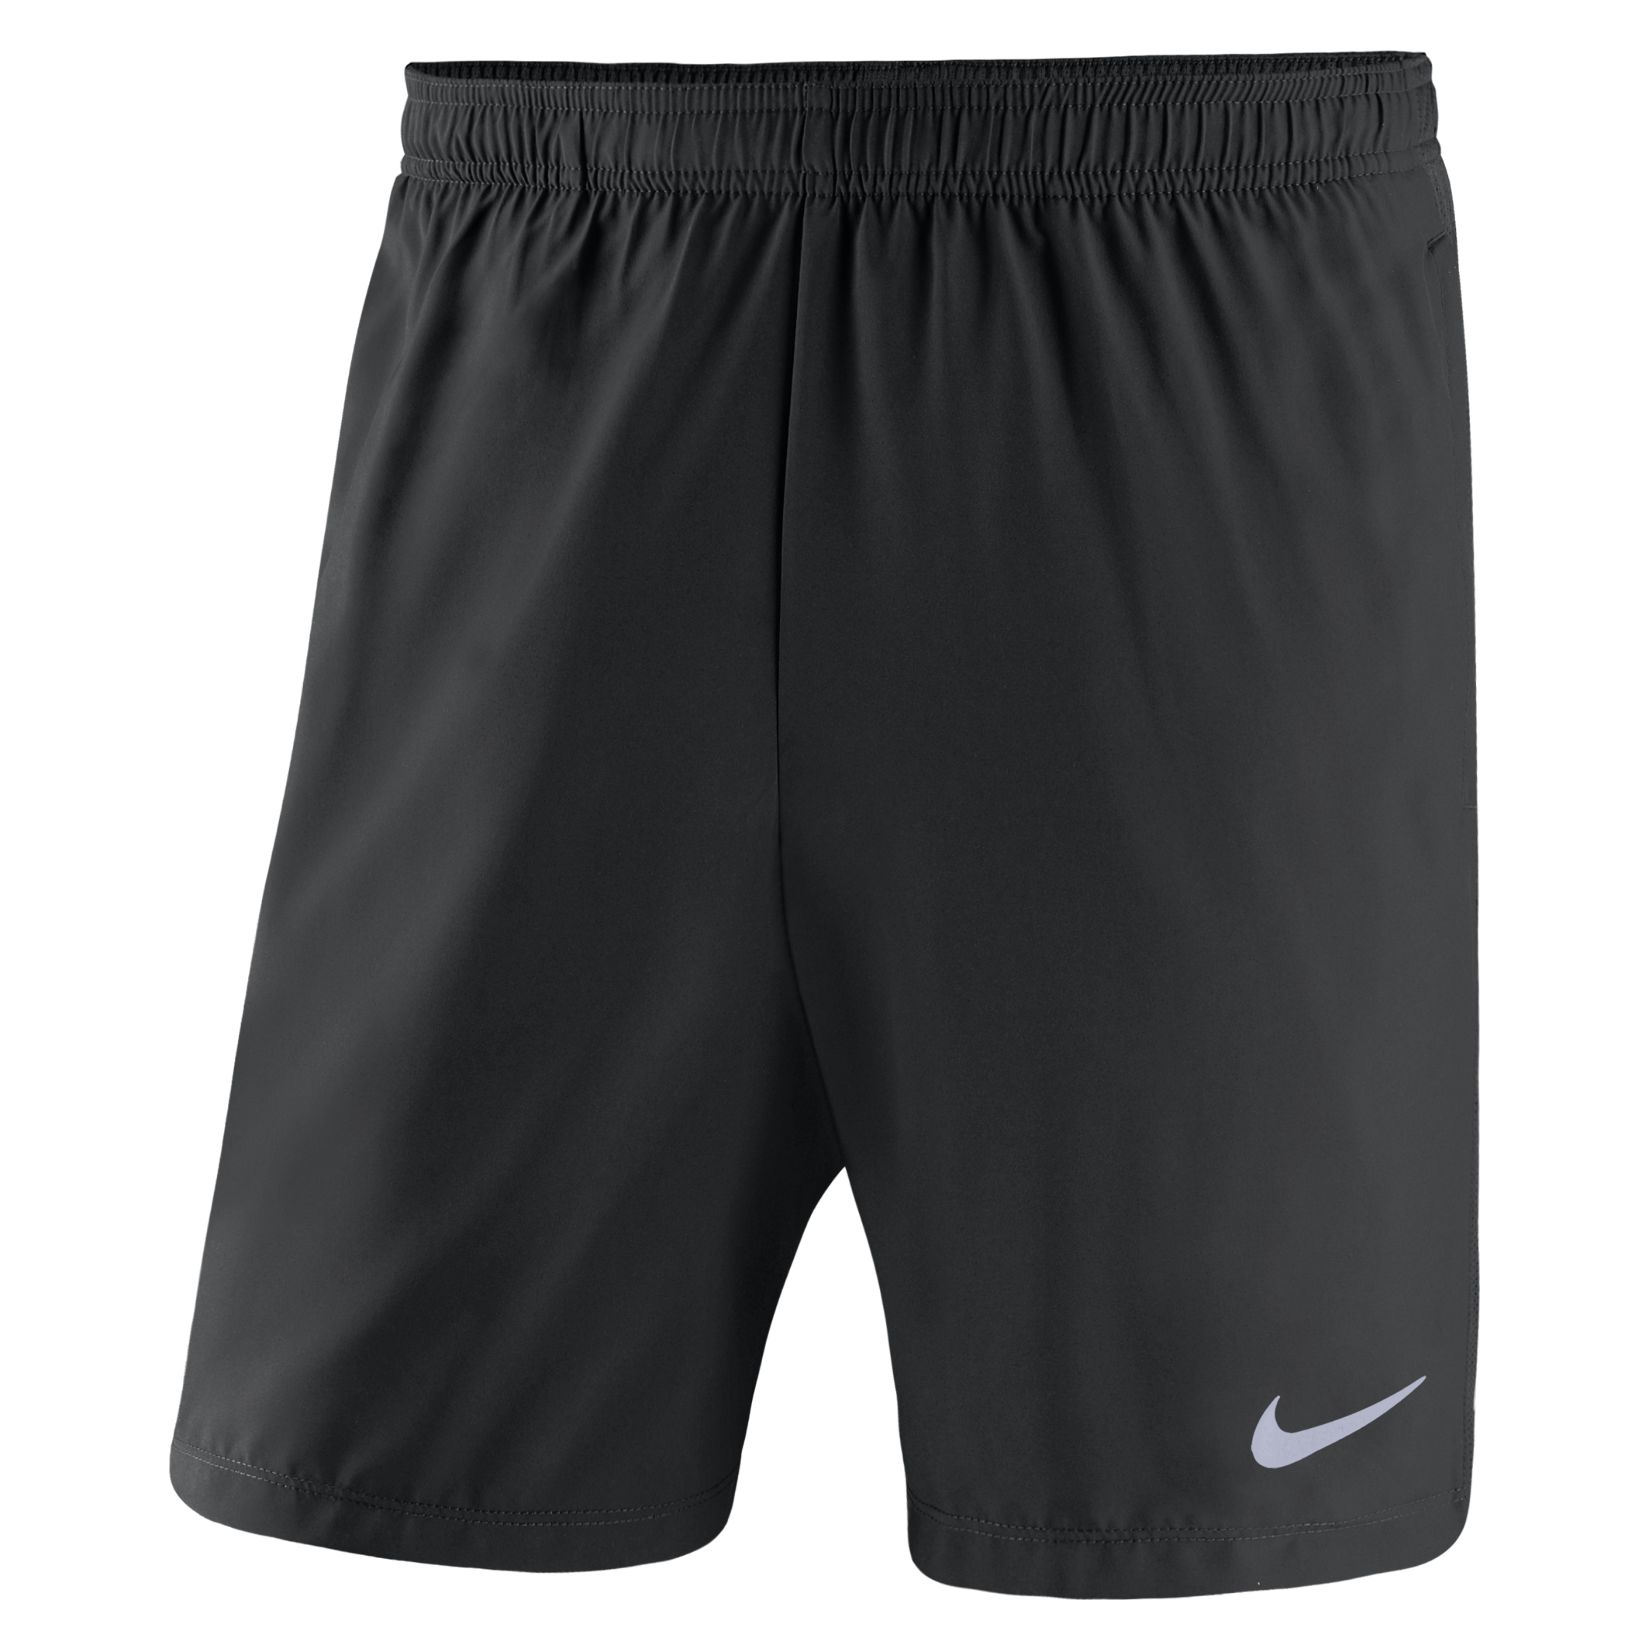 Nike Academy 18 Woven Shorts